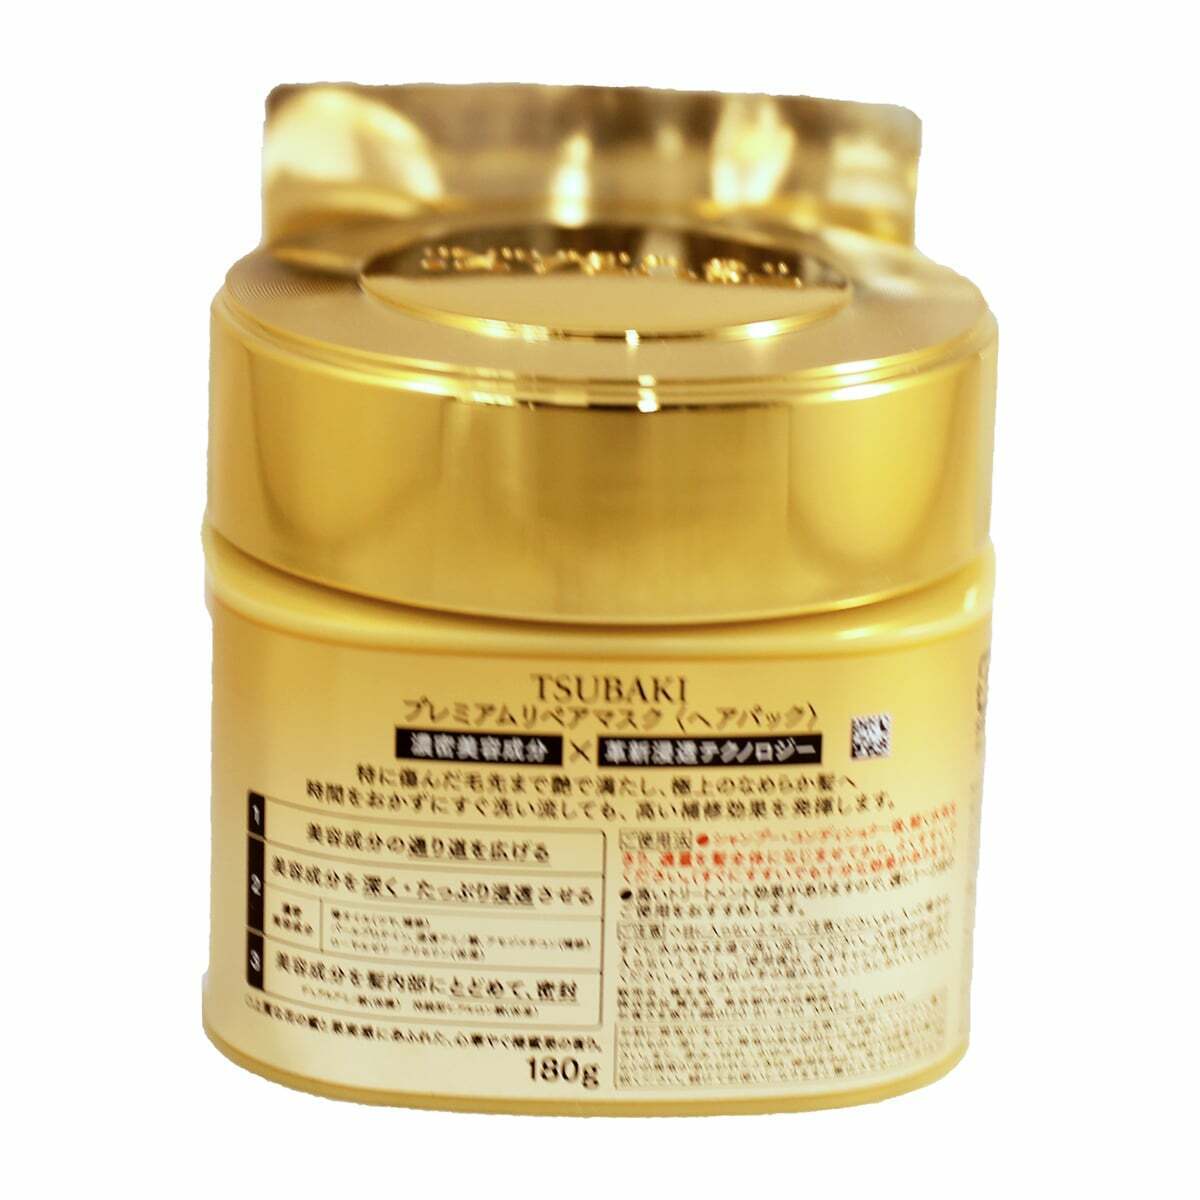 Shiseido Tsubaki Premium Repair Hair Mask Moisturize Hydrate All Types 180g NEW